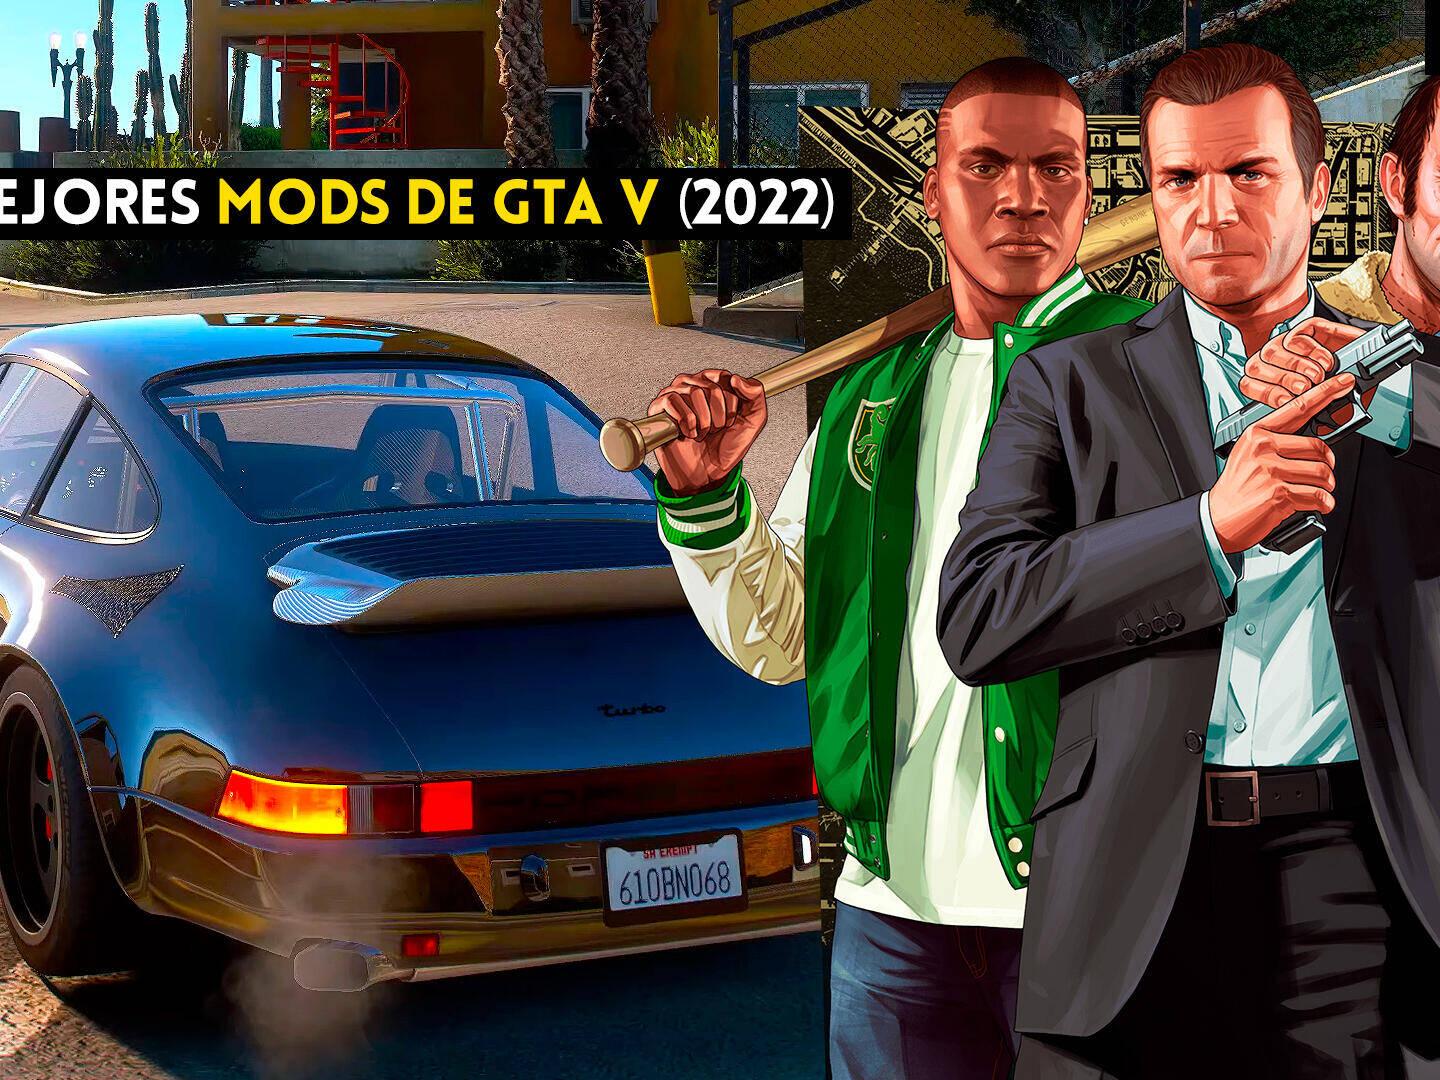 California Megamod for Grand Theft Auto: San Andreas - ModDB